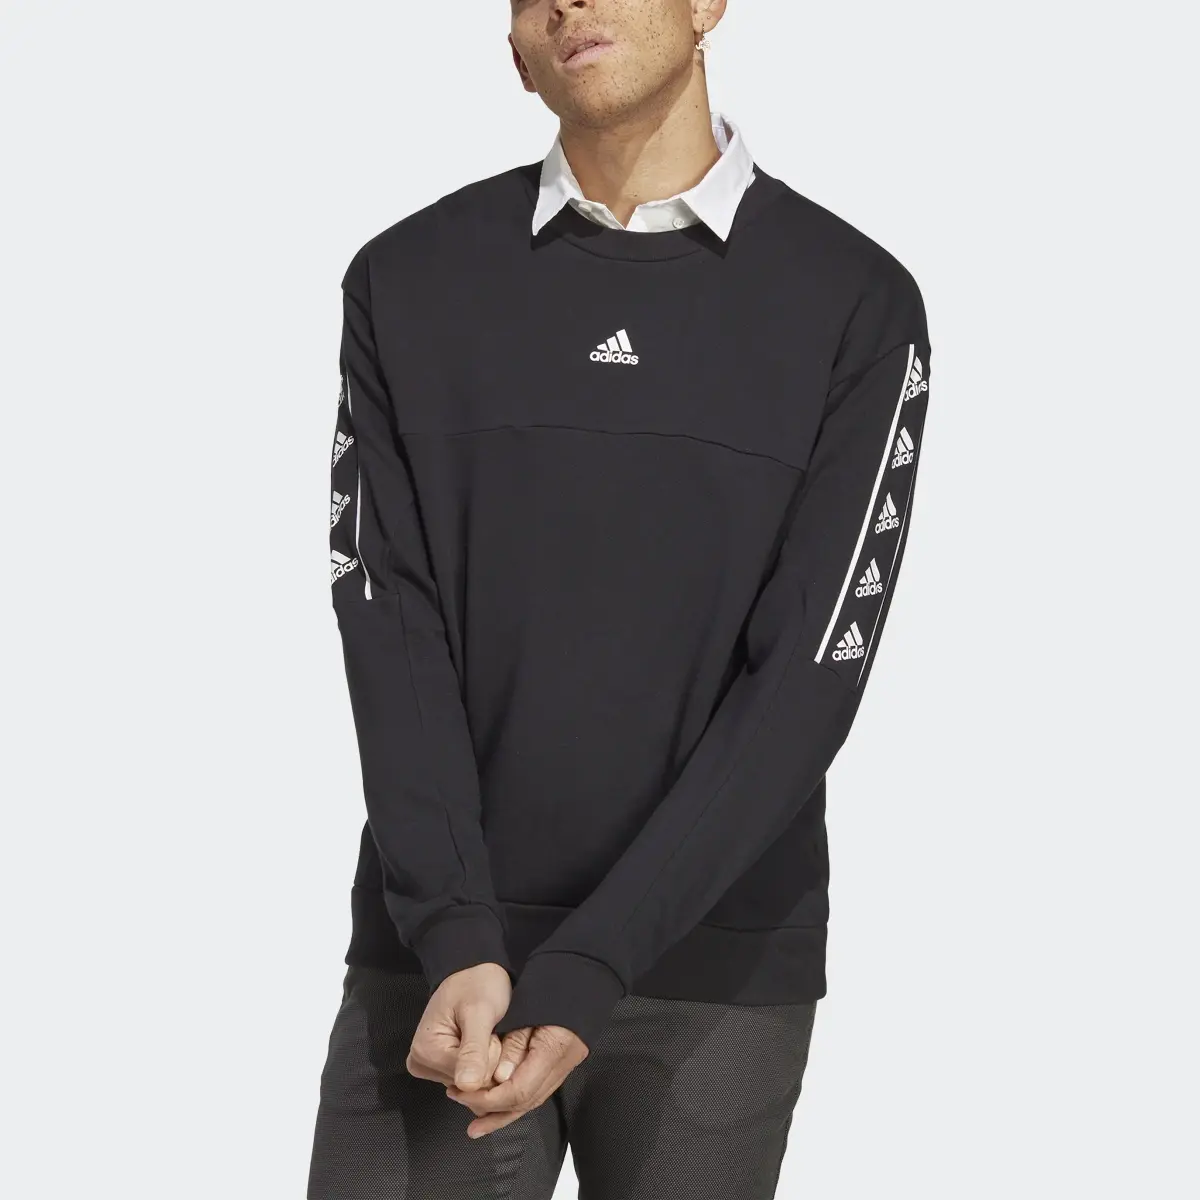 Adidas Brand Love Sweatshirt. 1